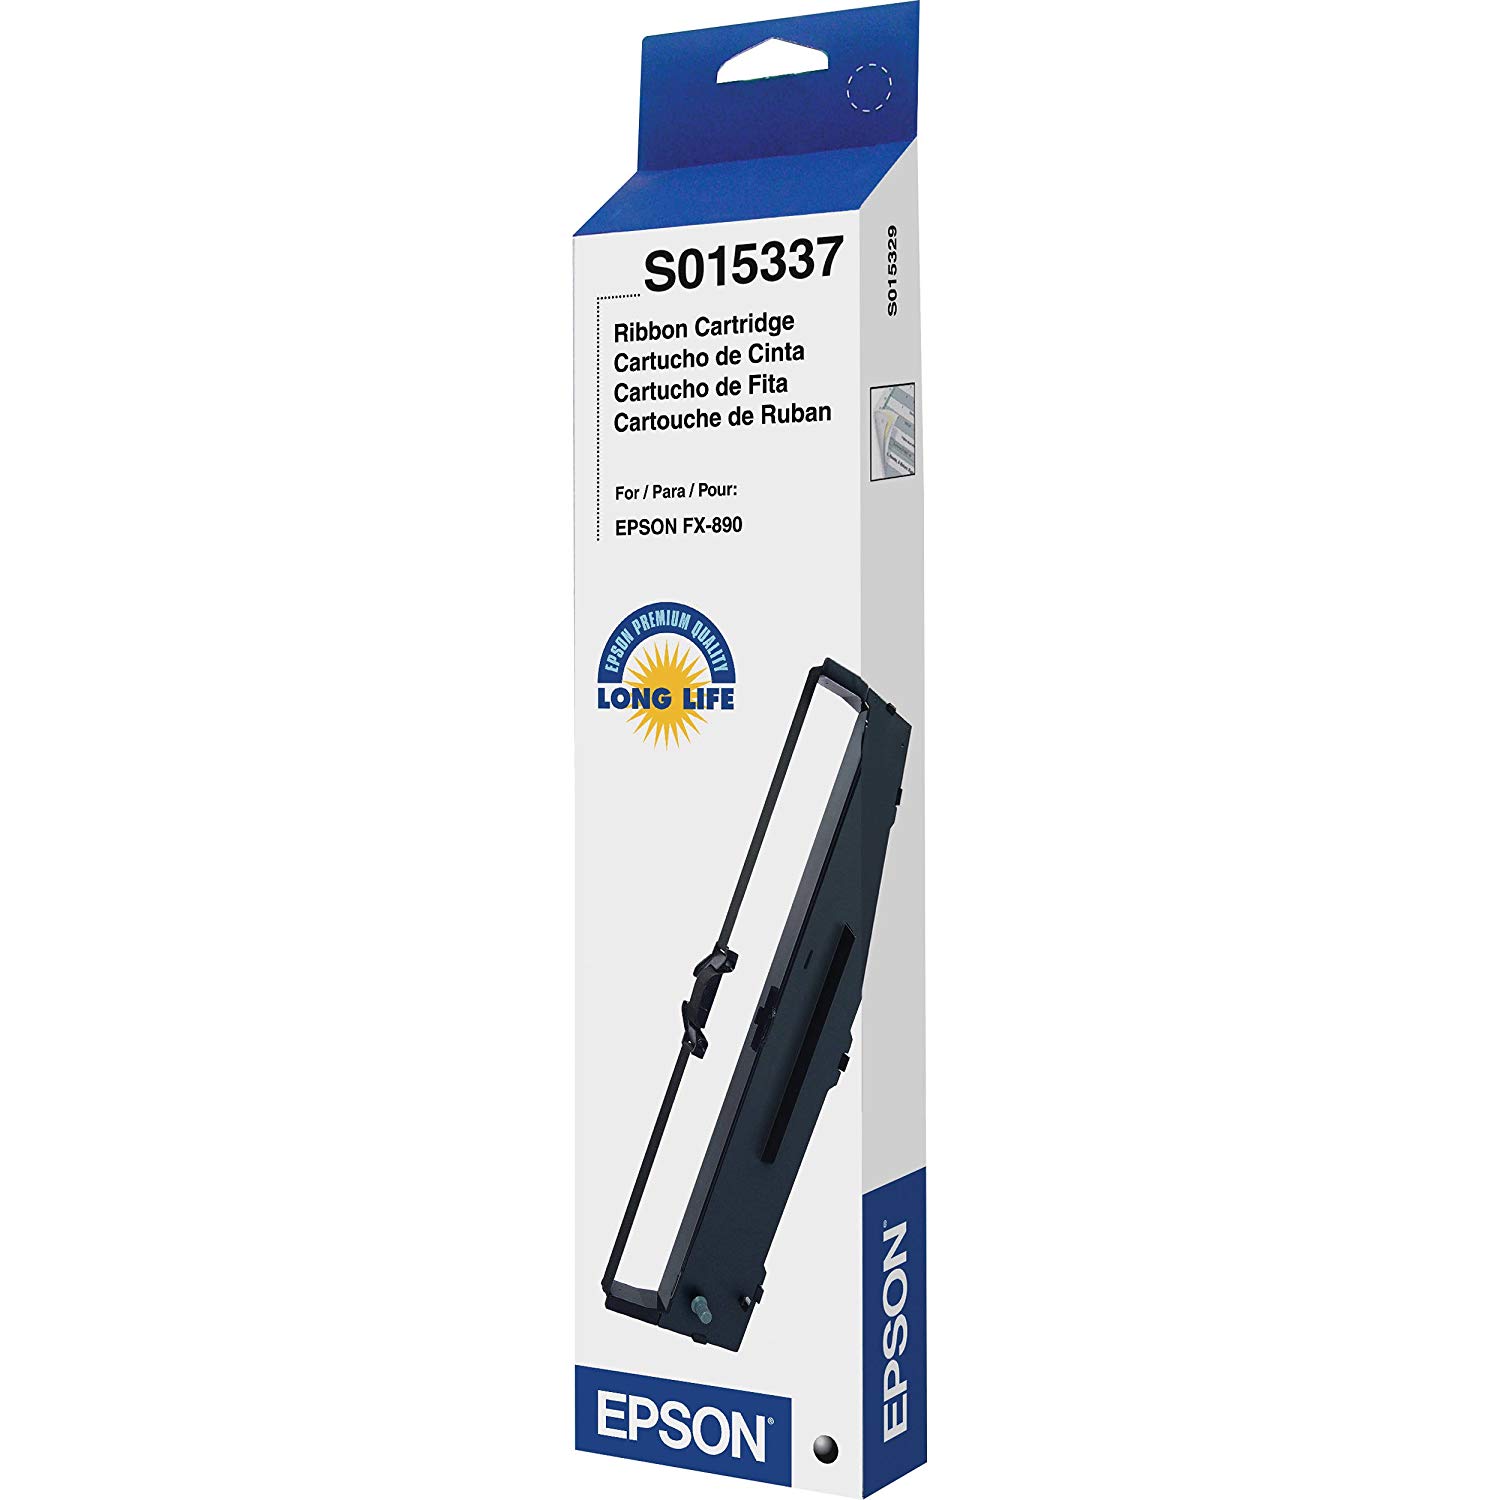 Epson LQ-590 Fabric Ribbon Cartridge S015337 - Black